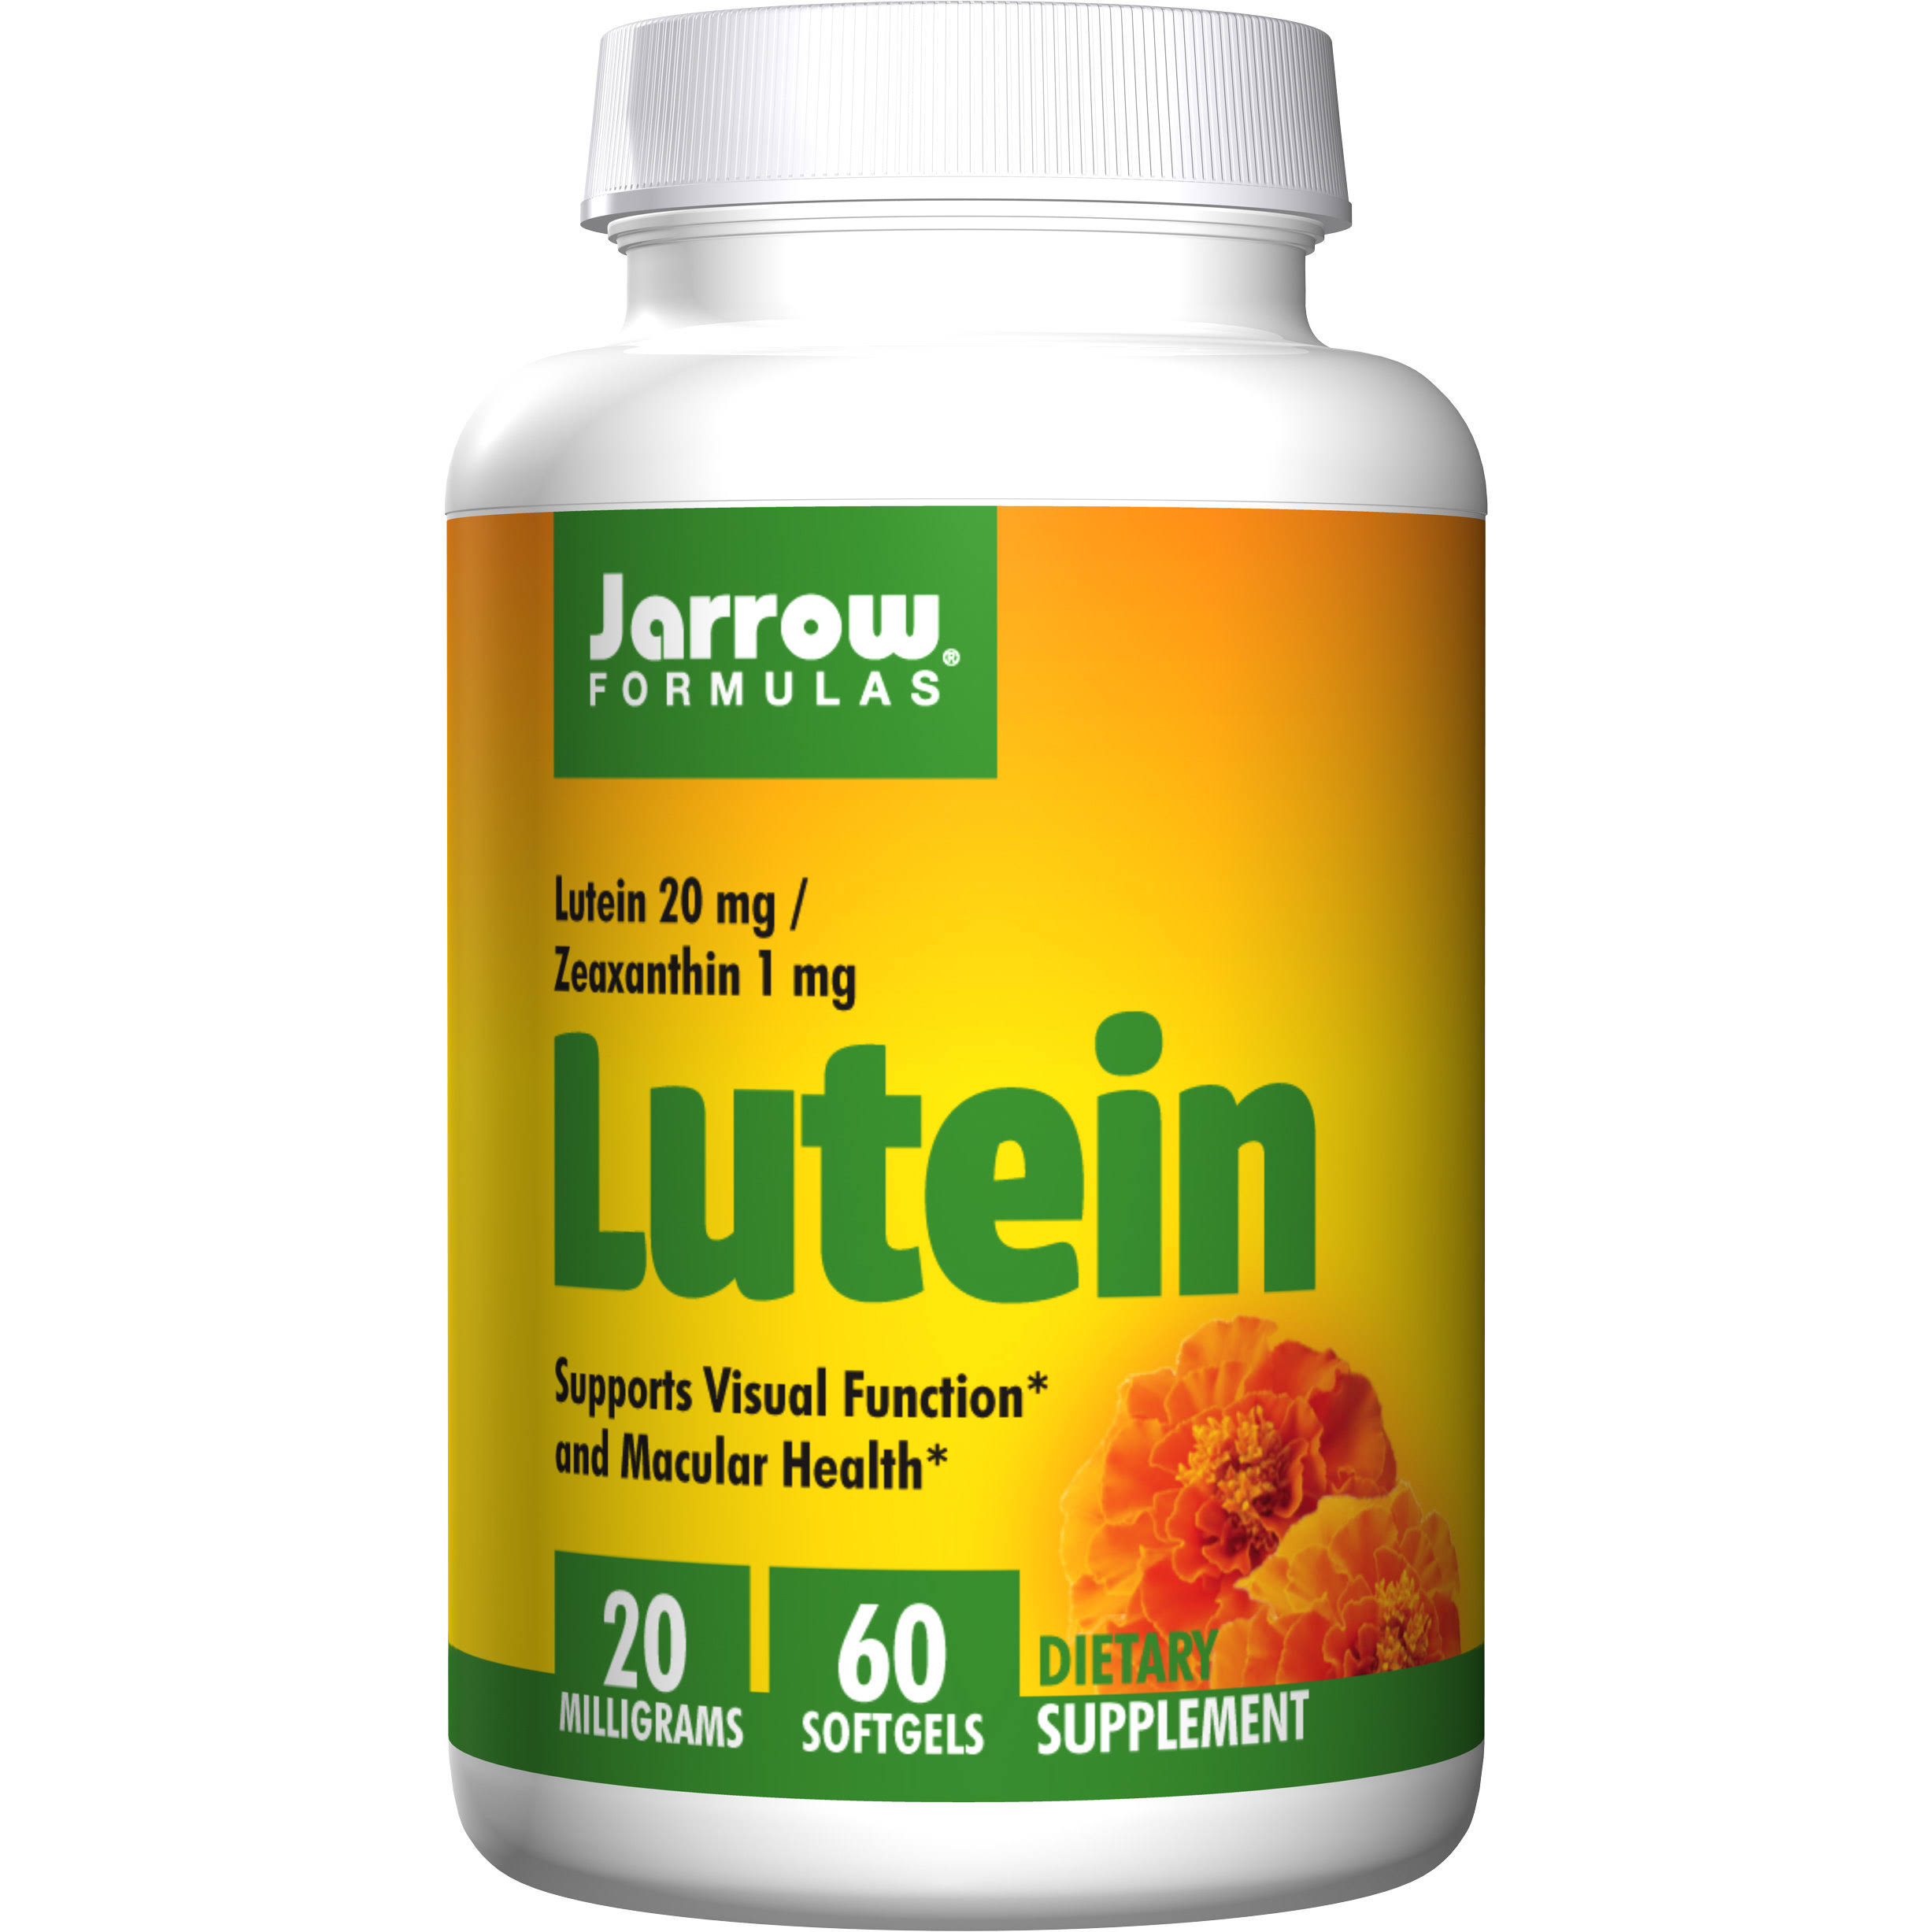 Jarrow Formulas Lutein Supplement - 60 Softgels